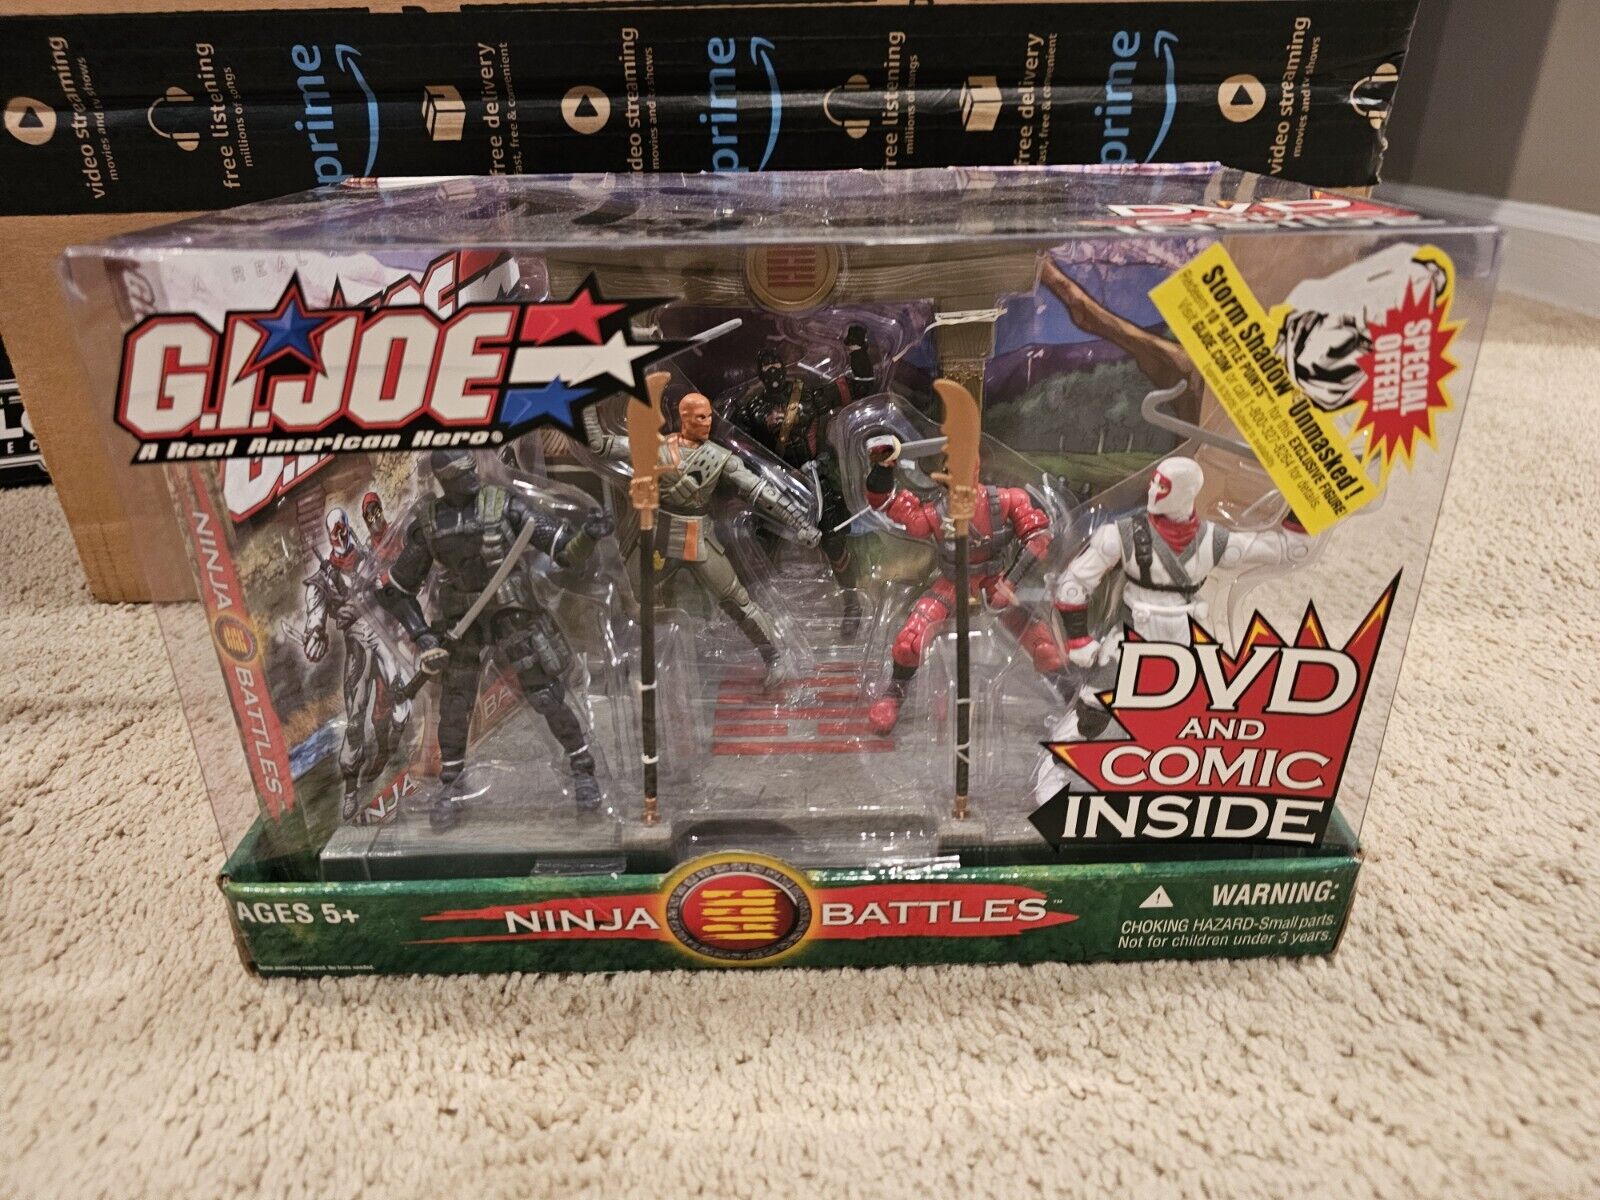 GI Joe 3.75” Ninja Battles 5-Pack w/ DVD & Comic Book 2004 MISB